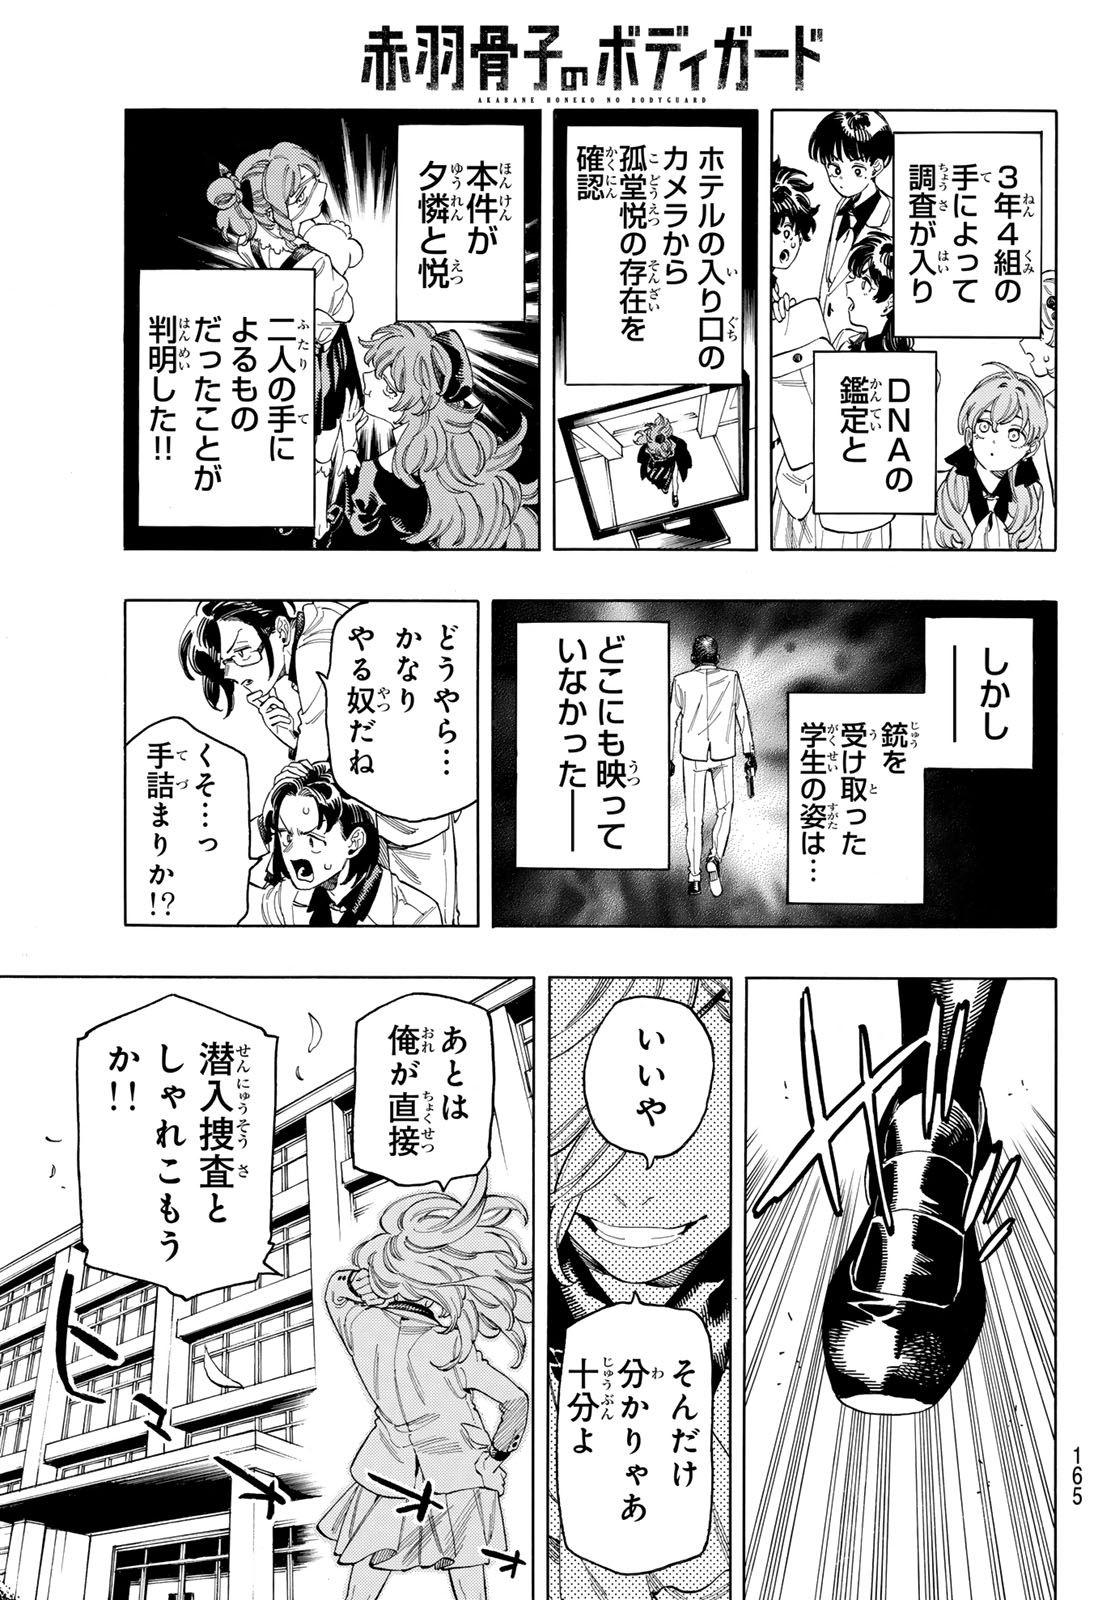 Akabane Honeko no Bodyguard - Chapter 76 - Page 20